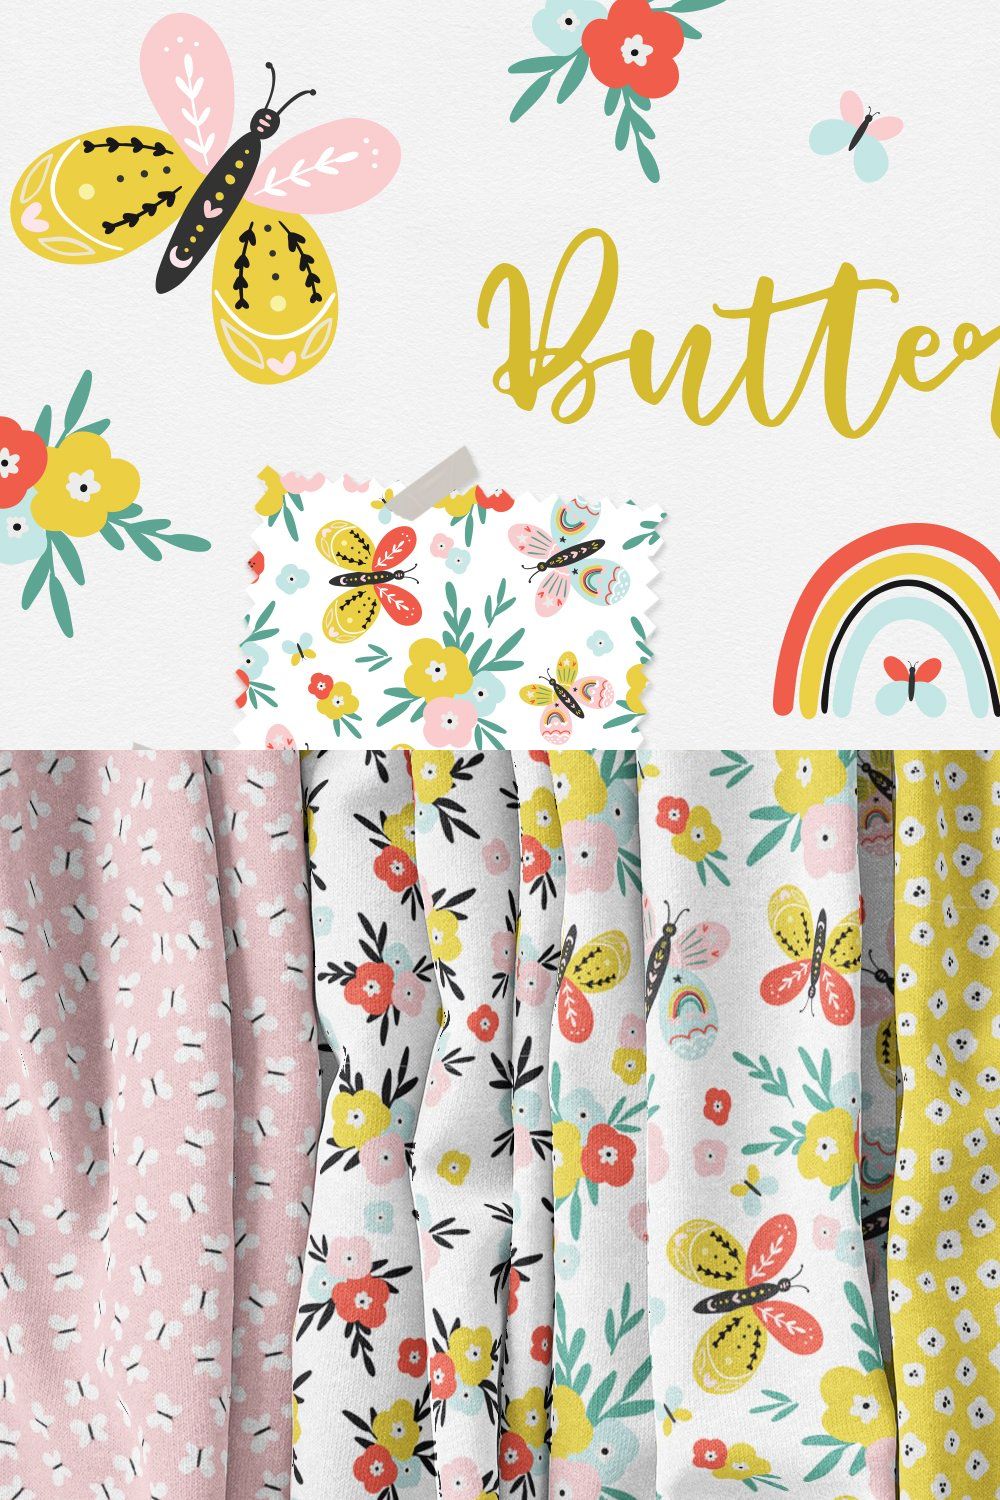 Butterflies patterns & clipart pinterest preview image.